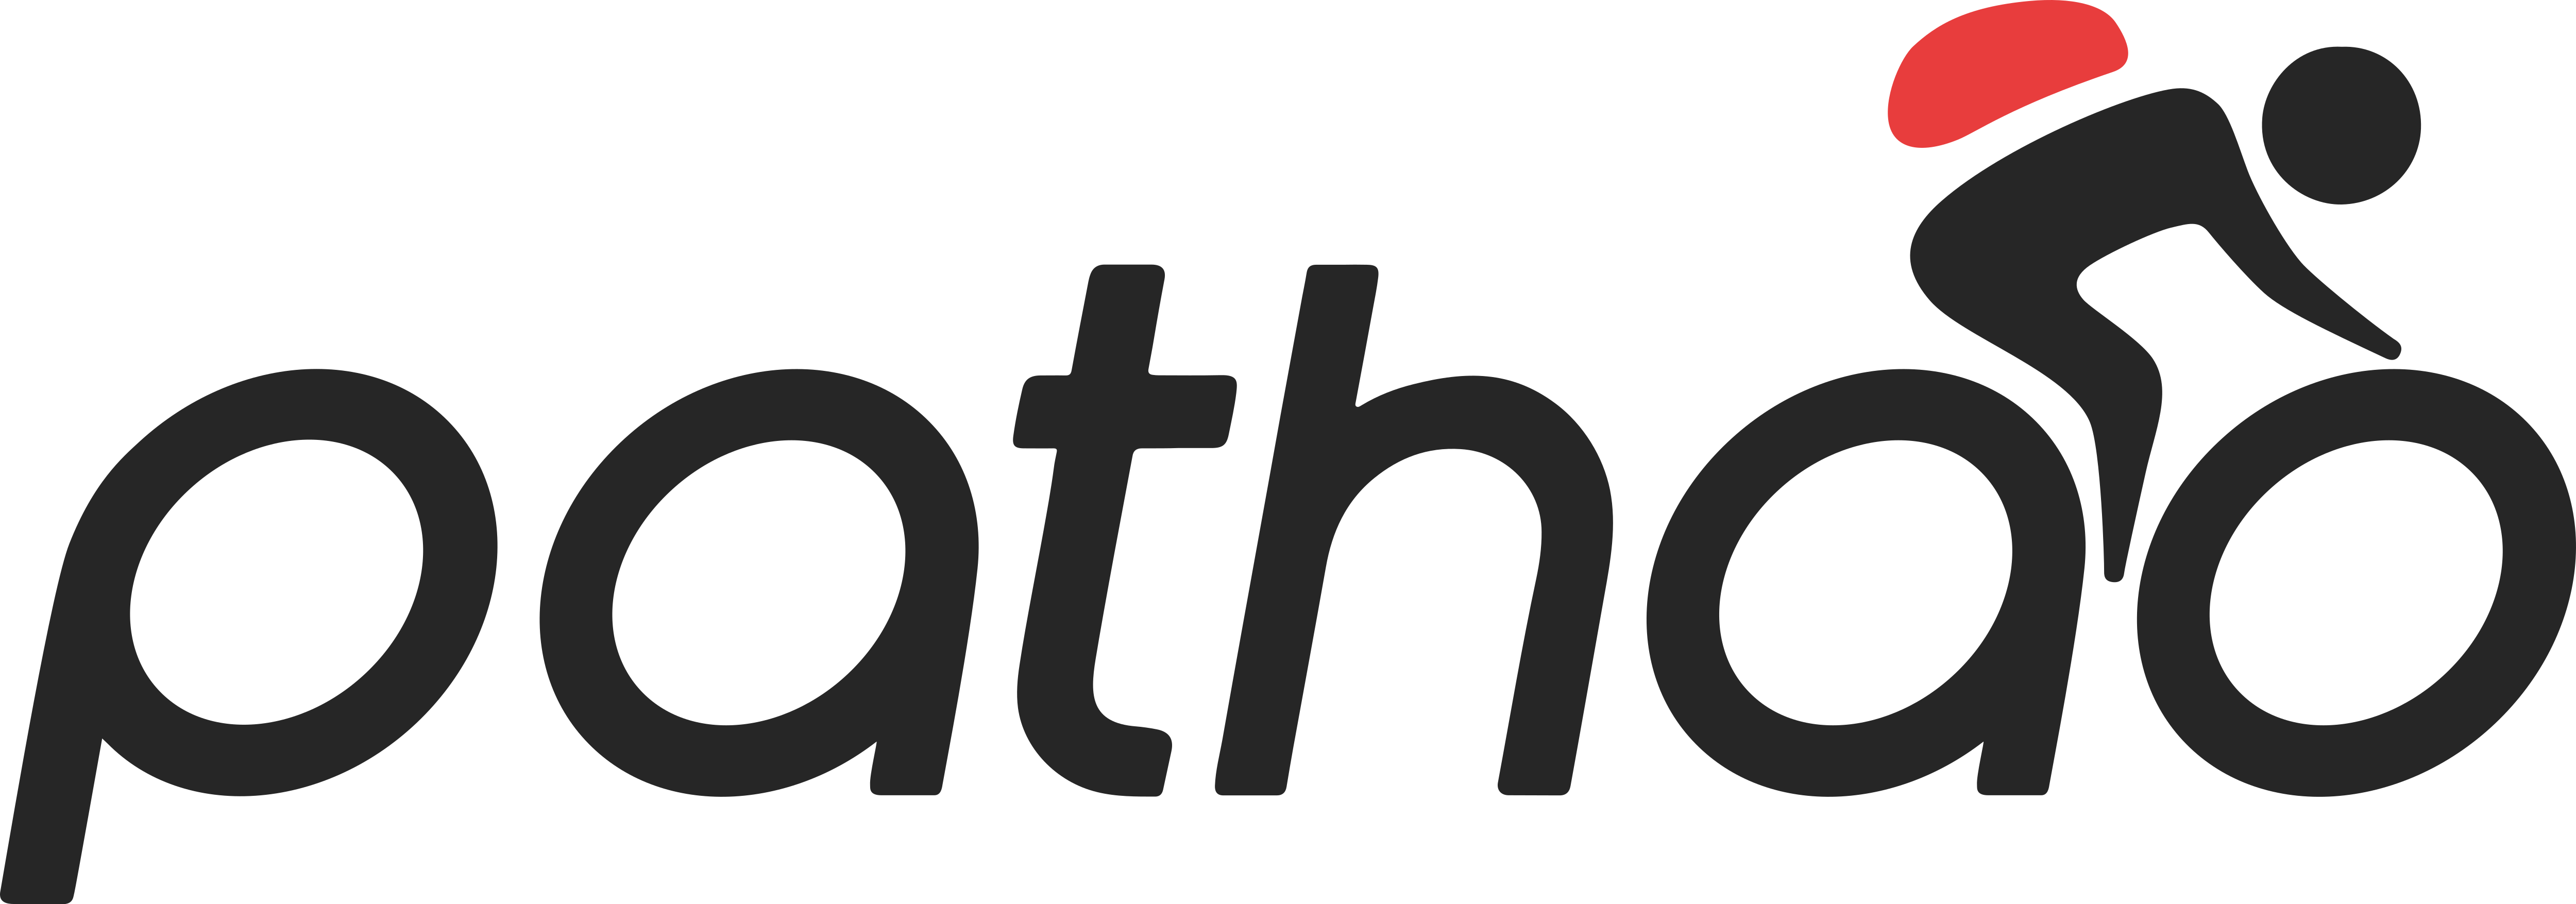 Pathao – Logos Download